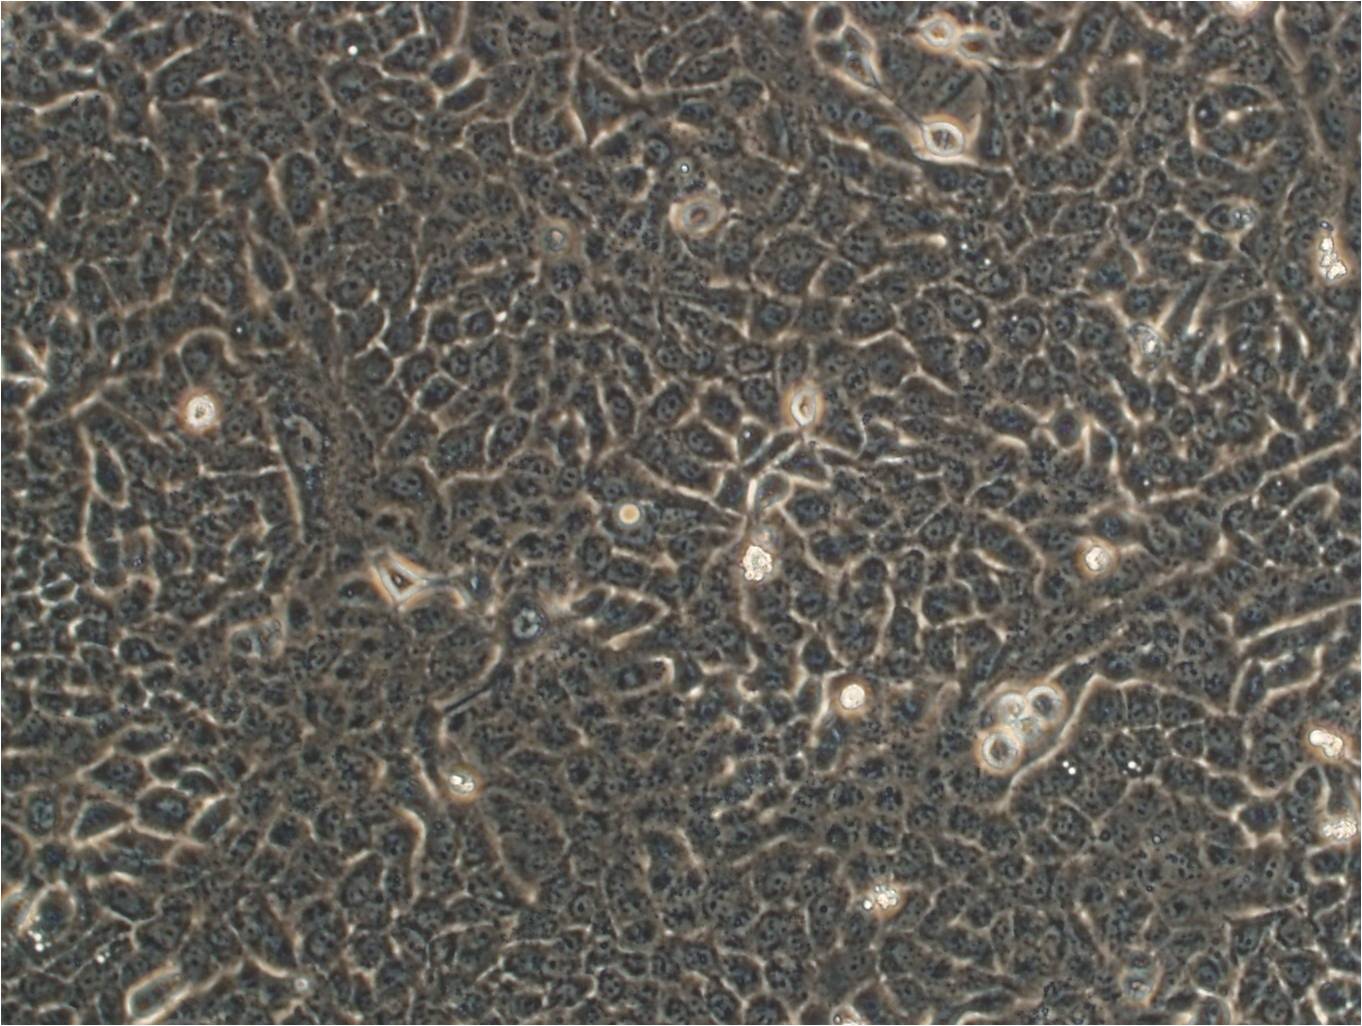 HBE135-E6E7 epithelioid cells人支气管上皮细胞系